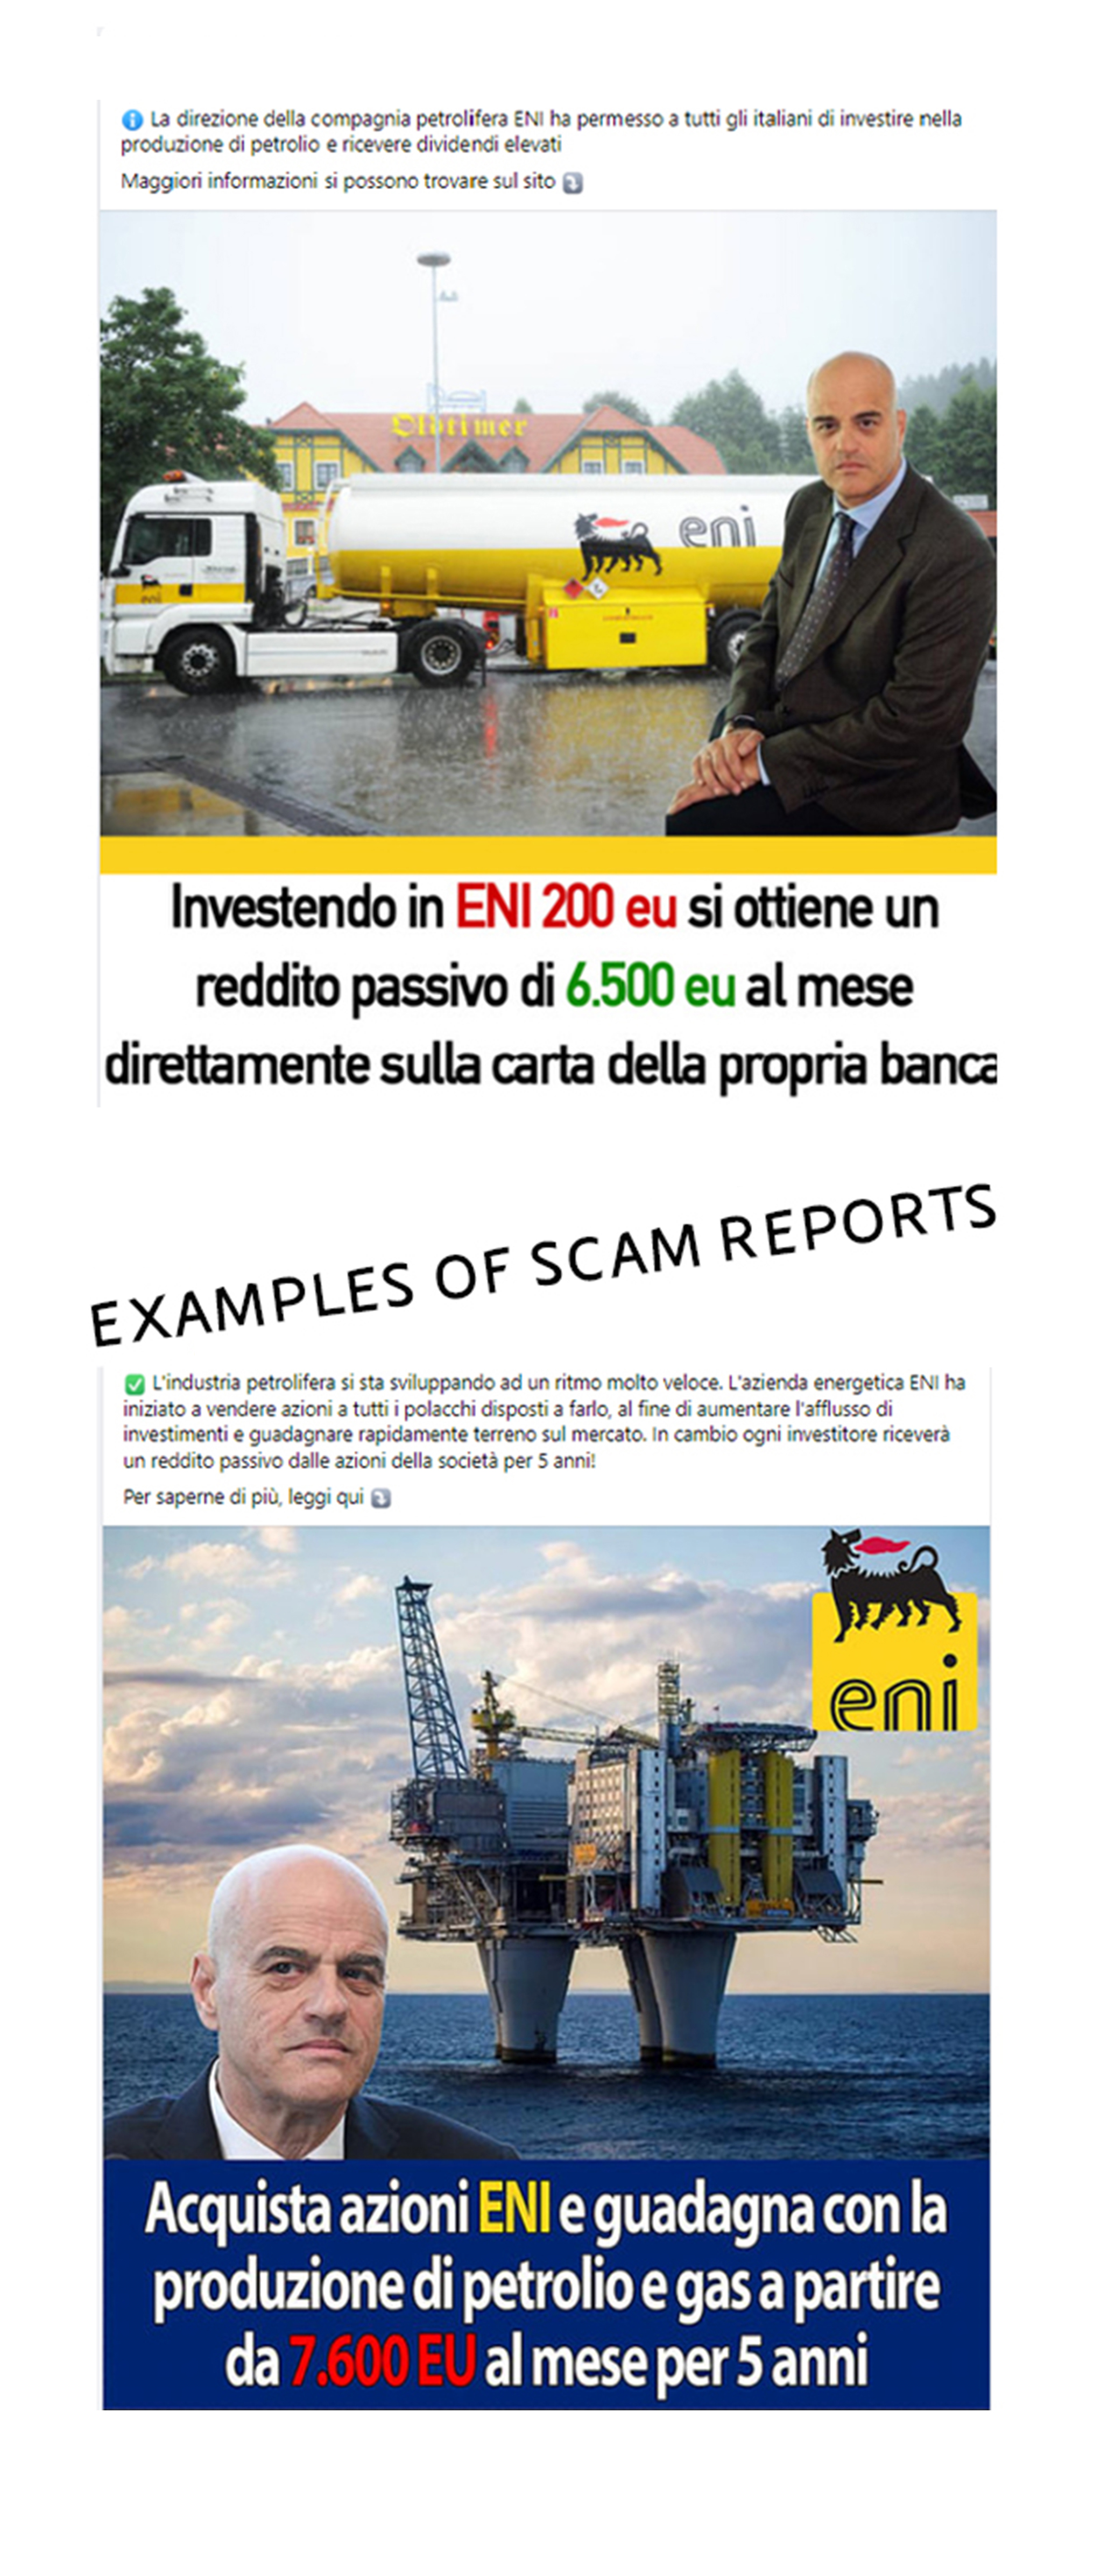 es-comunicazione-fraudolenta-mobile-eng-05.jpg